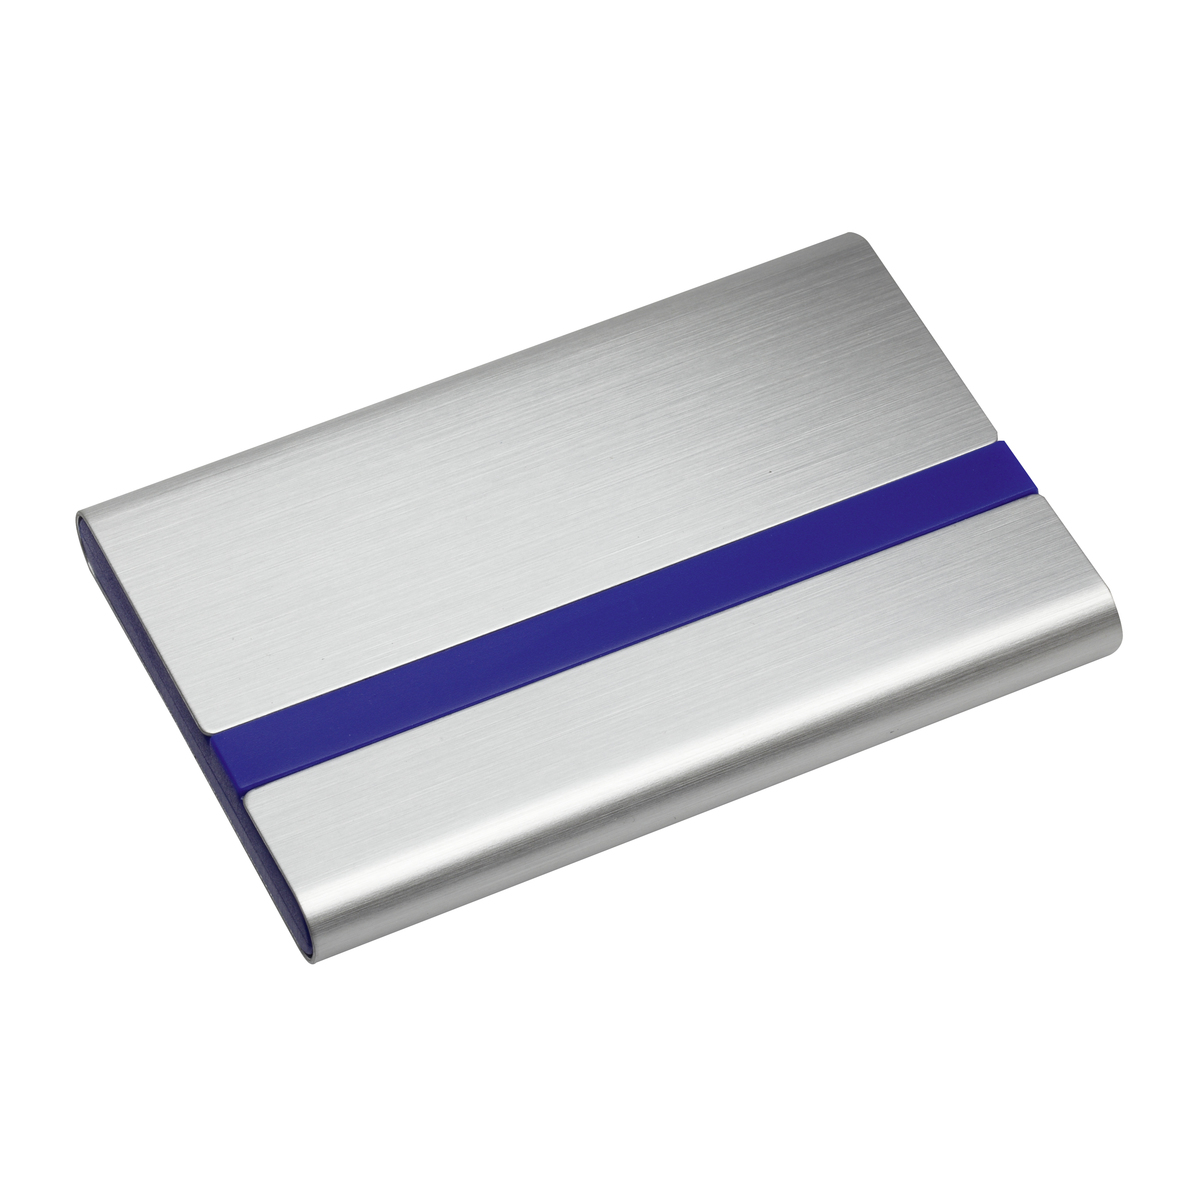 LM Visitenkartenbox REFLECTS-JANAÚBA SILVER BLUE blau, silber, silber/blau